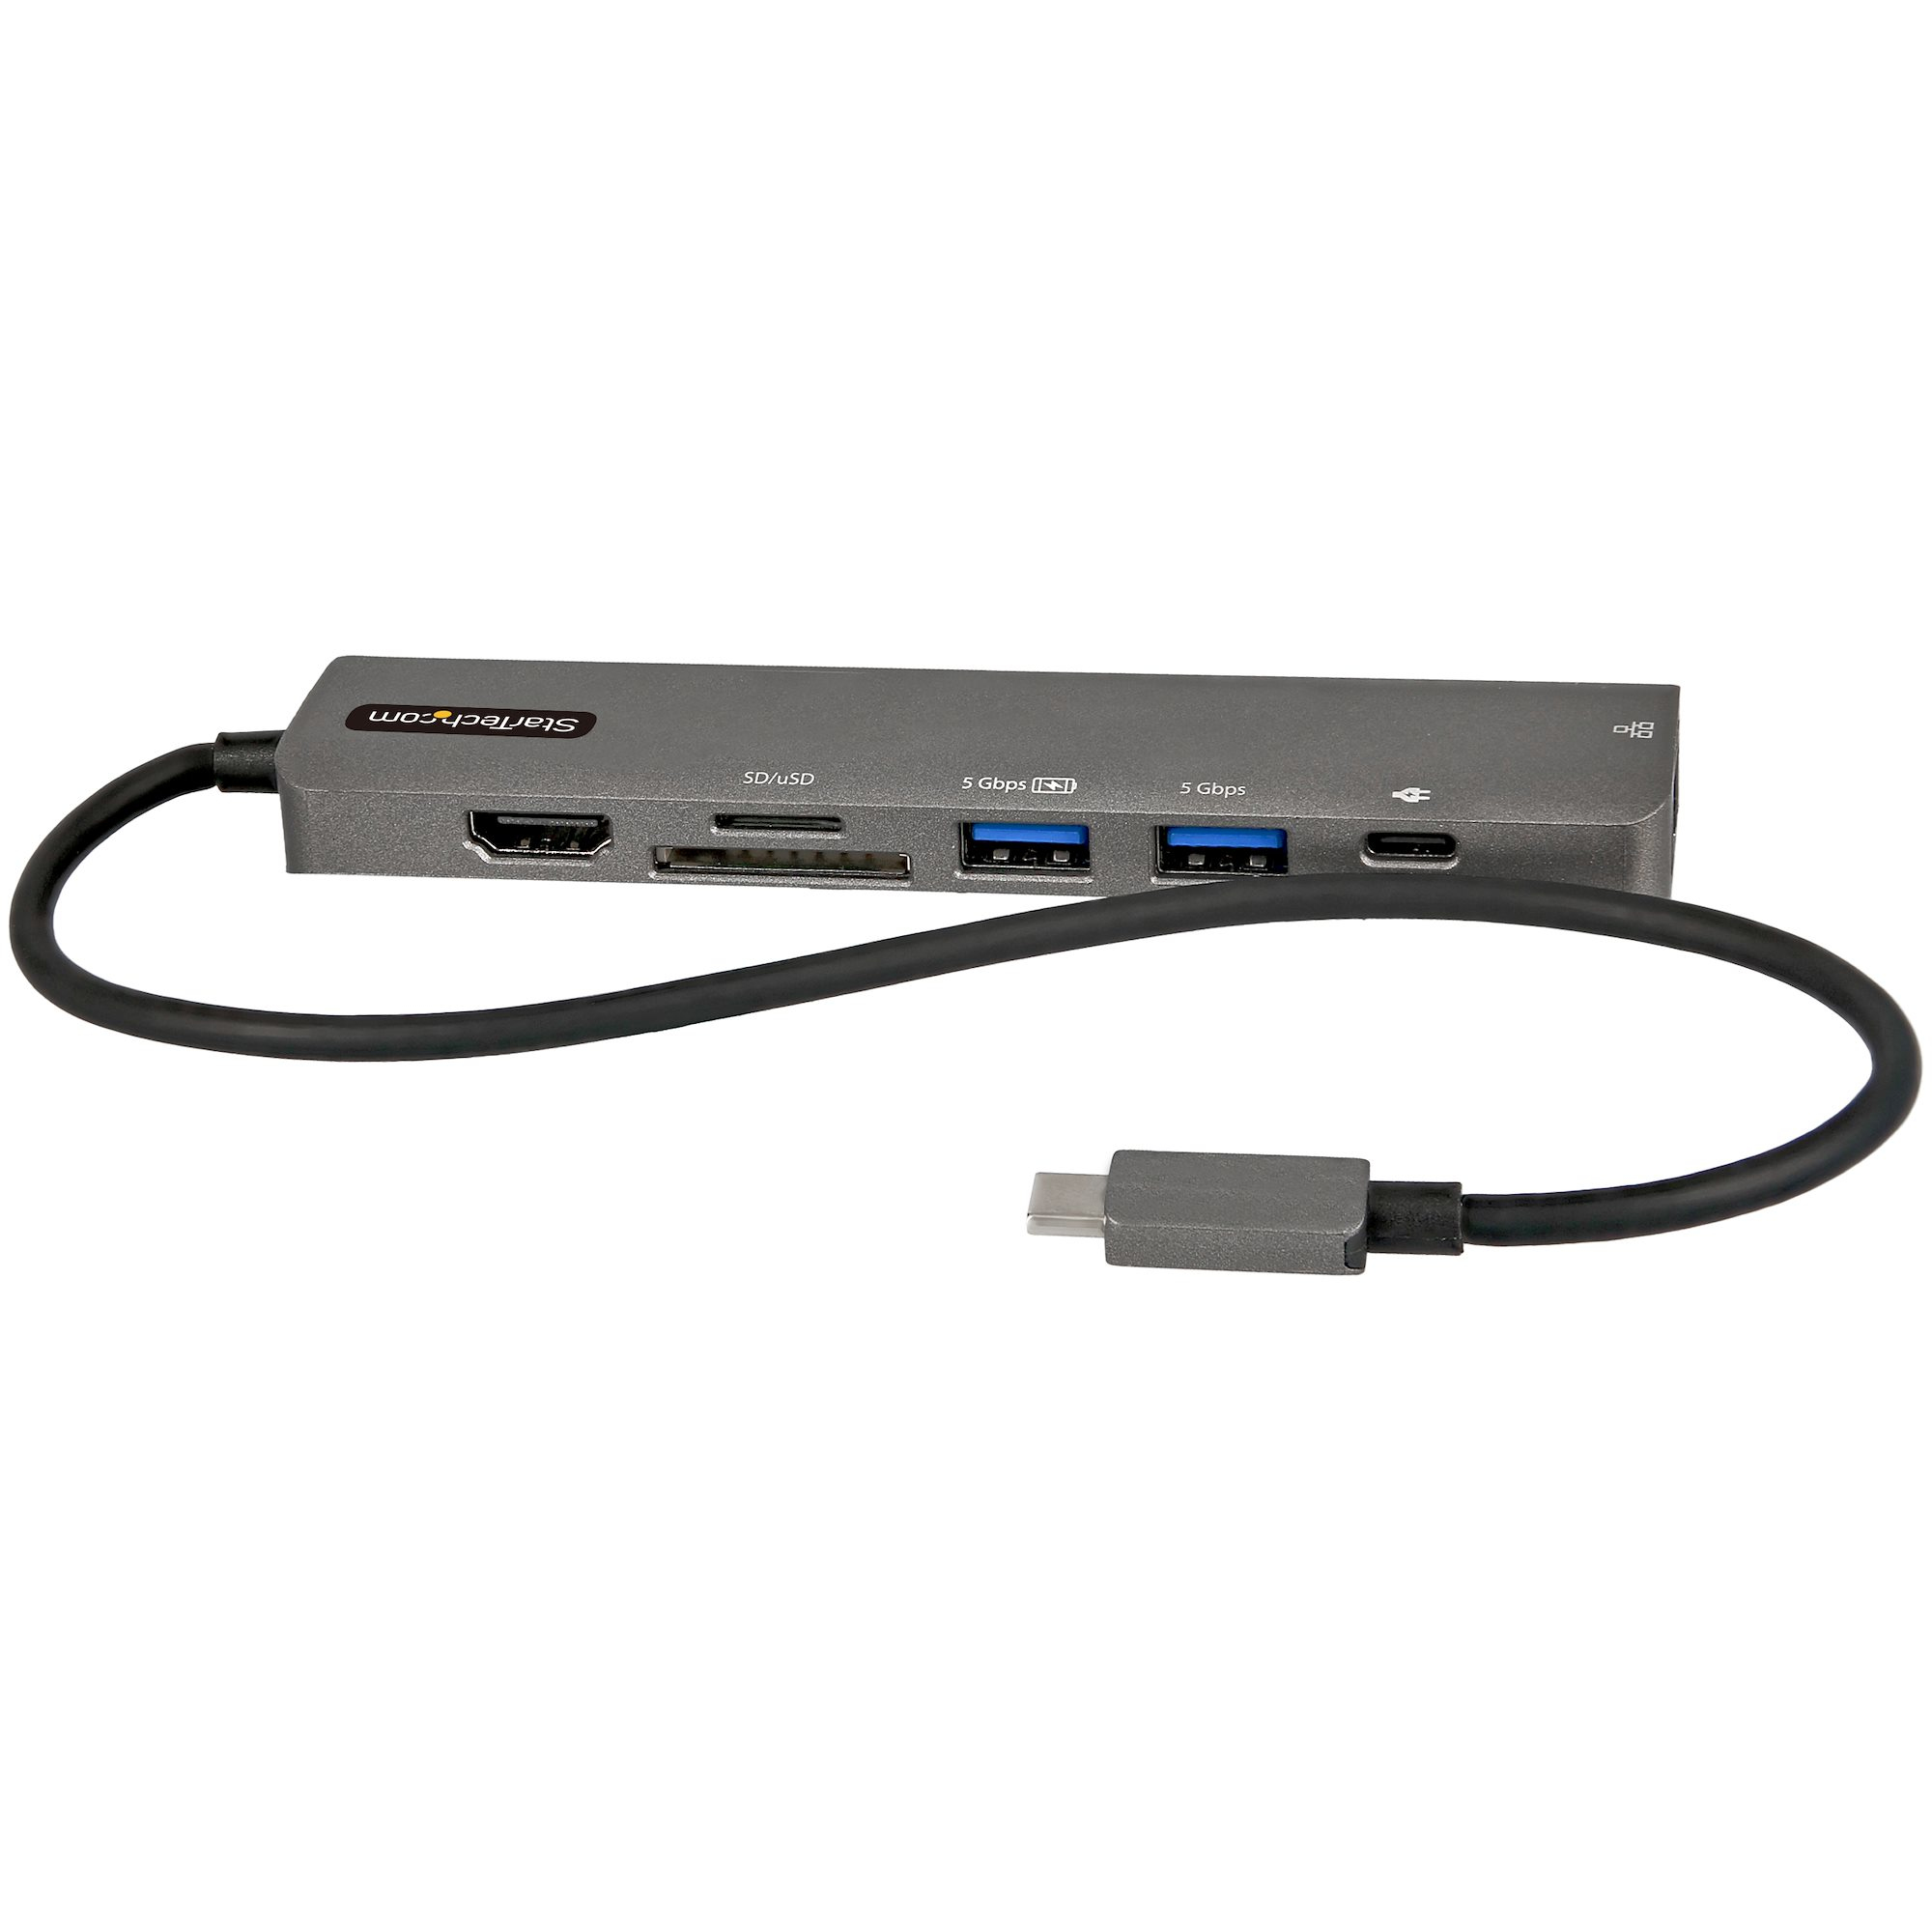 Adaptador USB a HDMI, concentrador USB 5 en 1 3.0 con HDMI 1080p para  monitor extendido, PC, laptop, 2 puertos USB, lector de tarjetas SD y Micro  SD